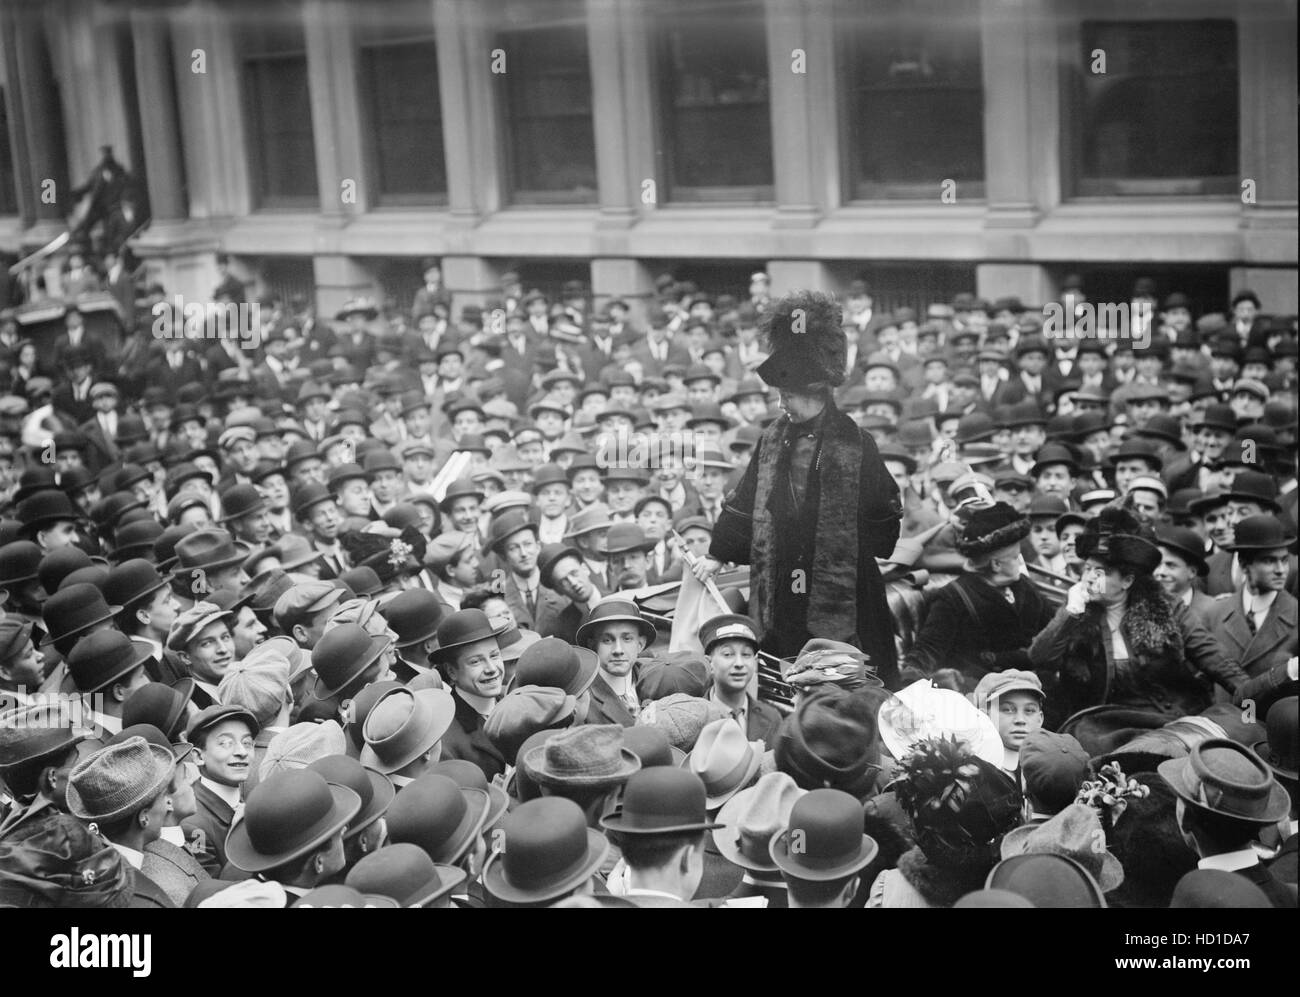 British Suffragist Leader Emmeline Pankhurst folla di indirizzamento, Wall Street, New York New York, Stati Uniti d'America, Bain News Service, Novembre 27, 1911 Foto Stock